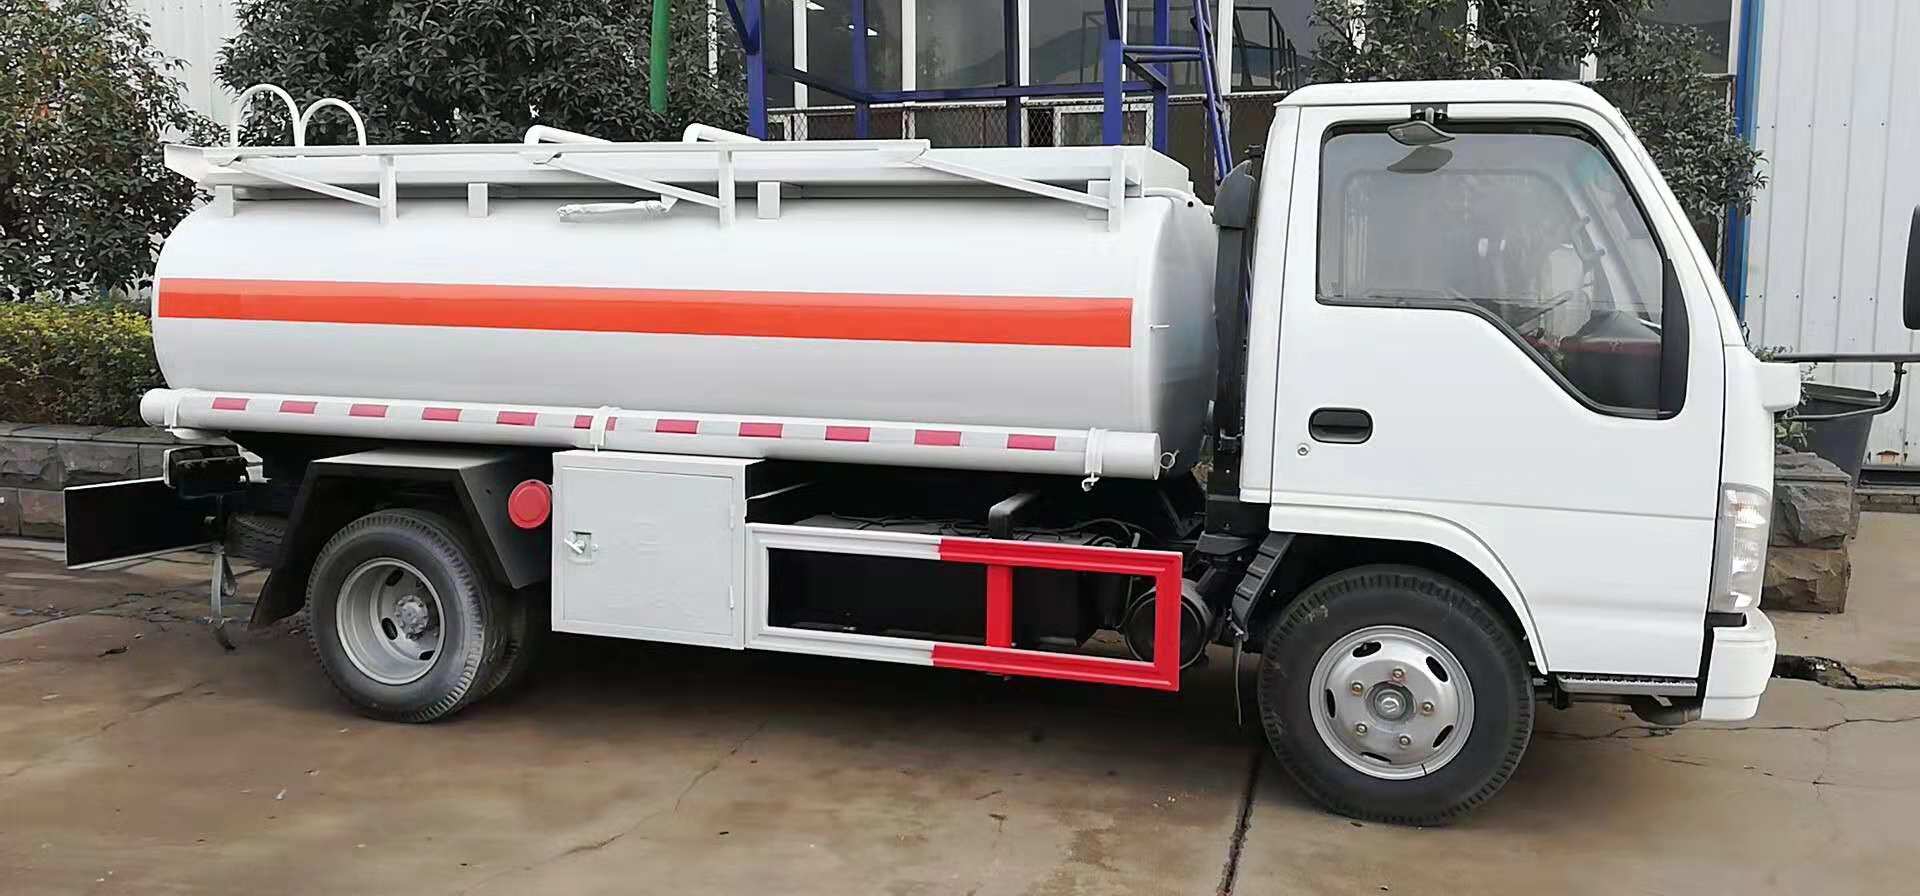 Japan Brand Mini 5000 Liters Refueling Truck